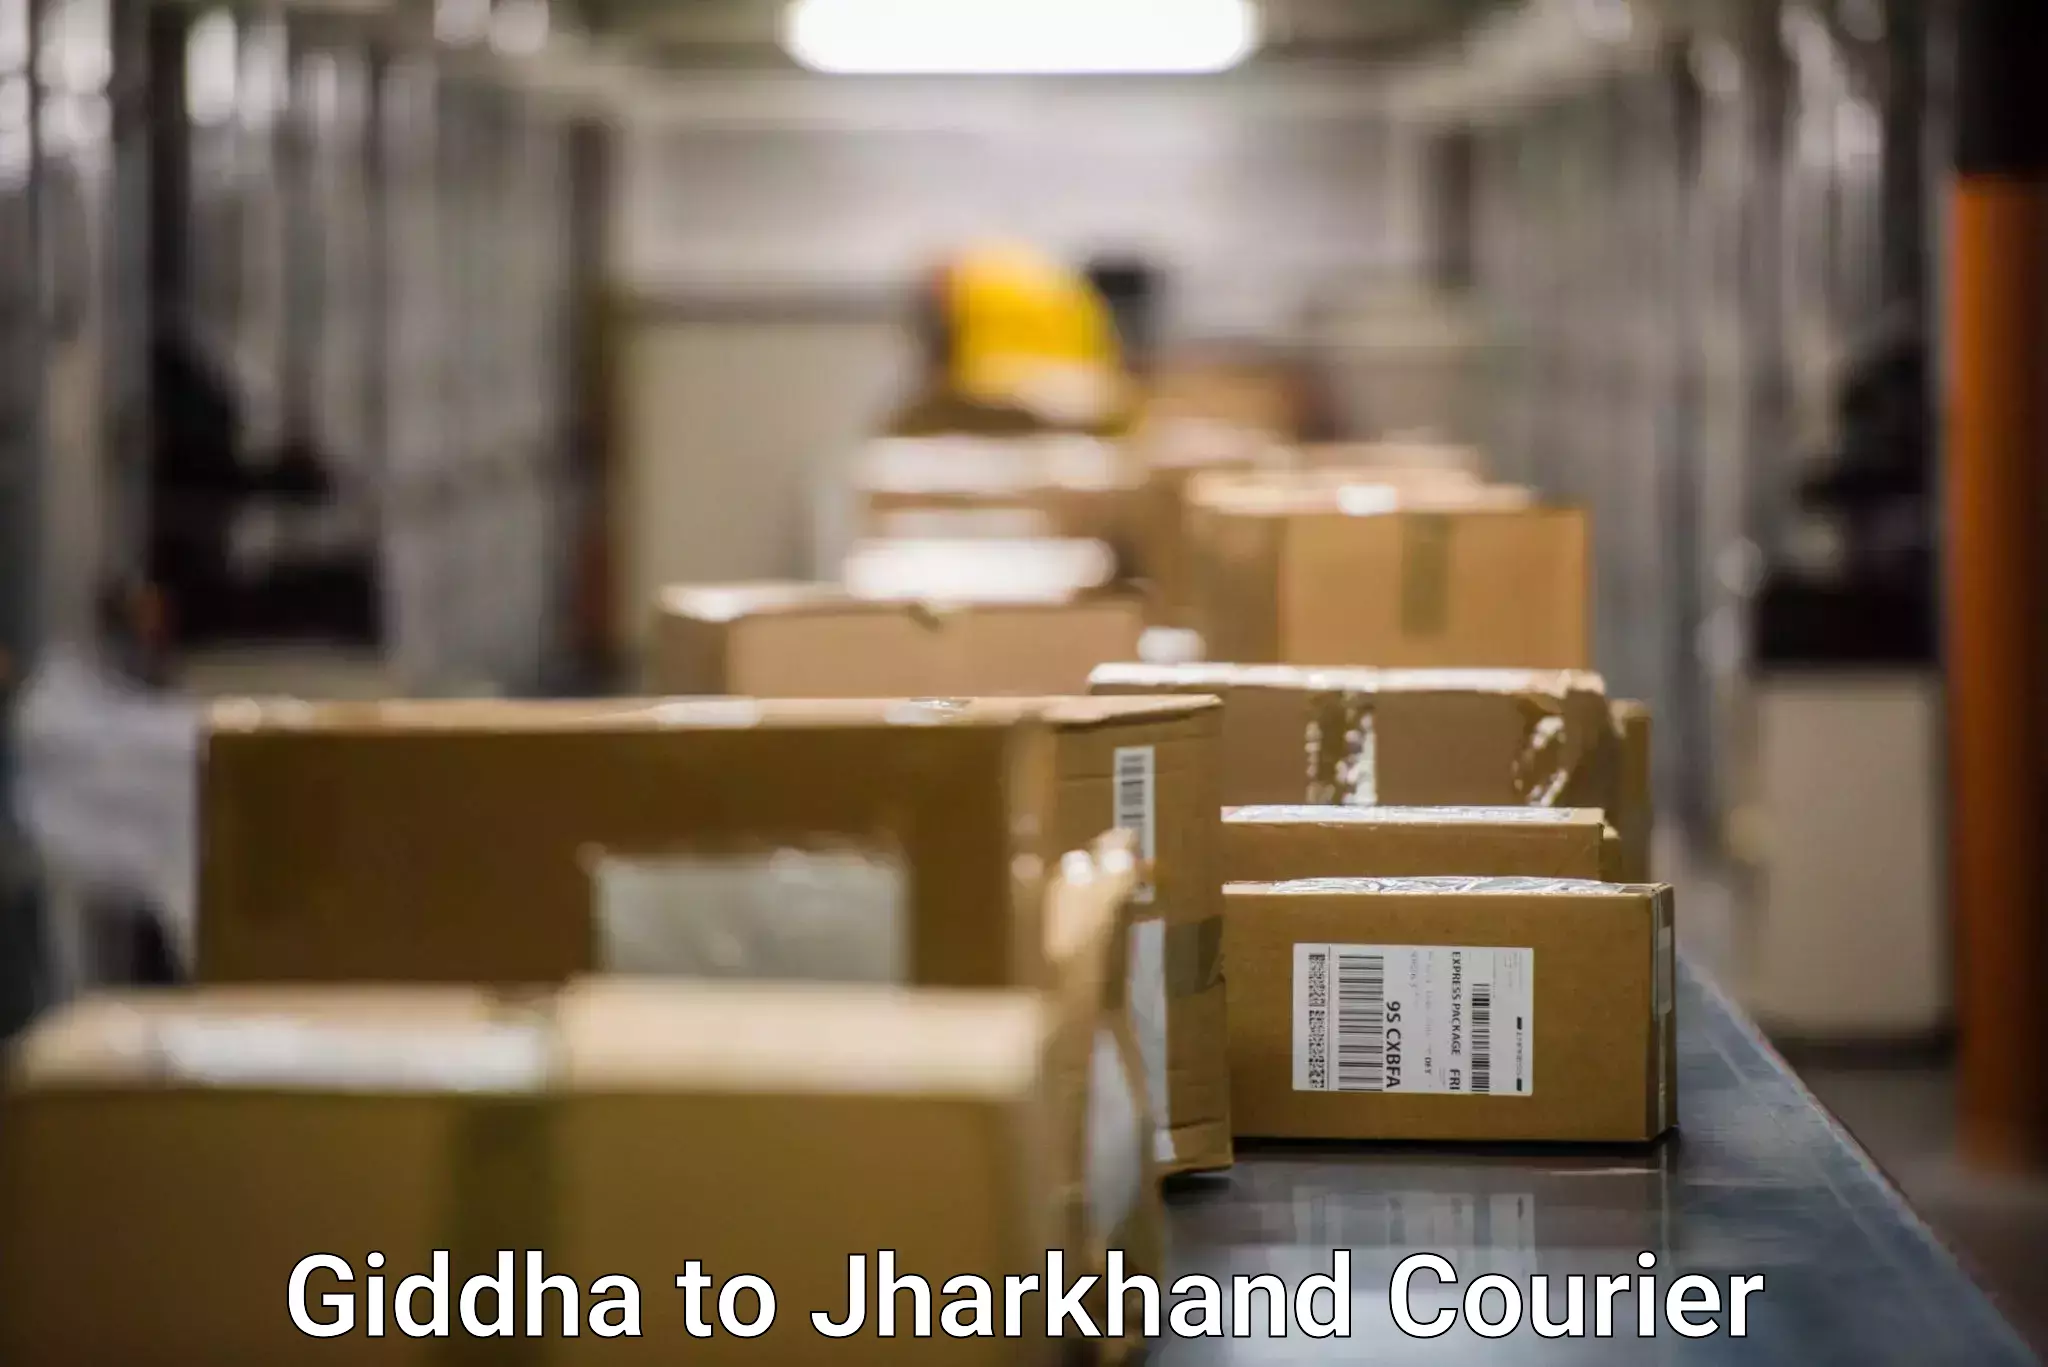 International parcel service Giddha to Jharkhand